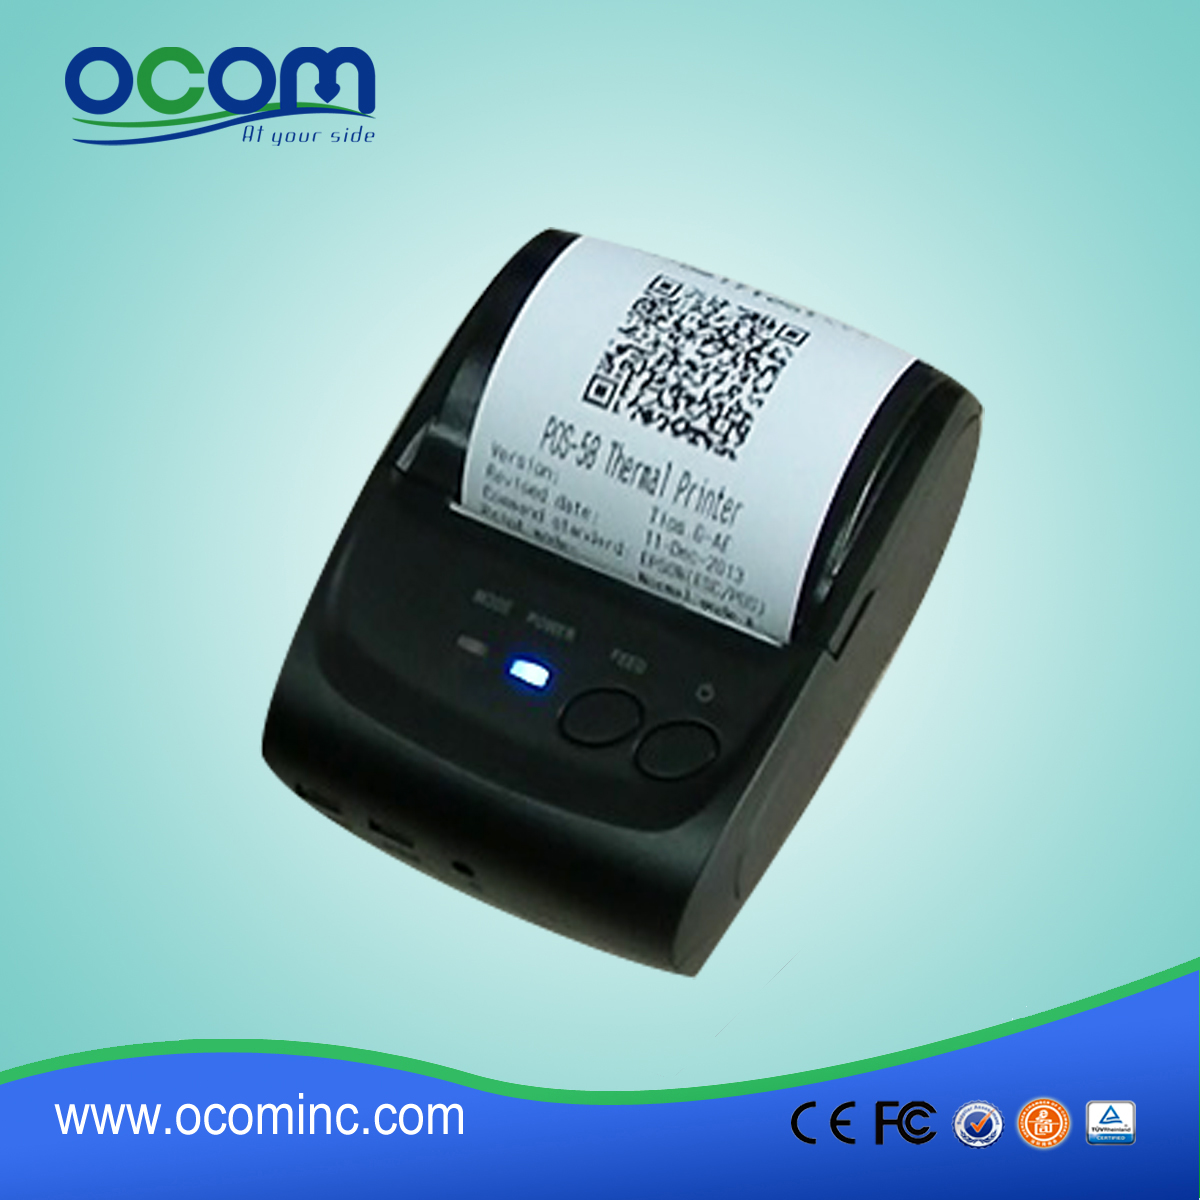 58mm Android Portable USB Bluetooth Thermal Printer - OCPP-M05